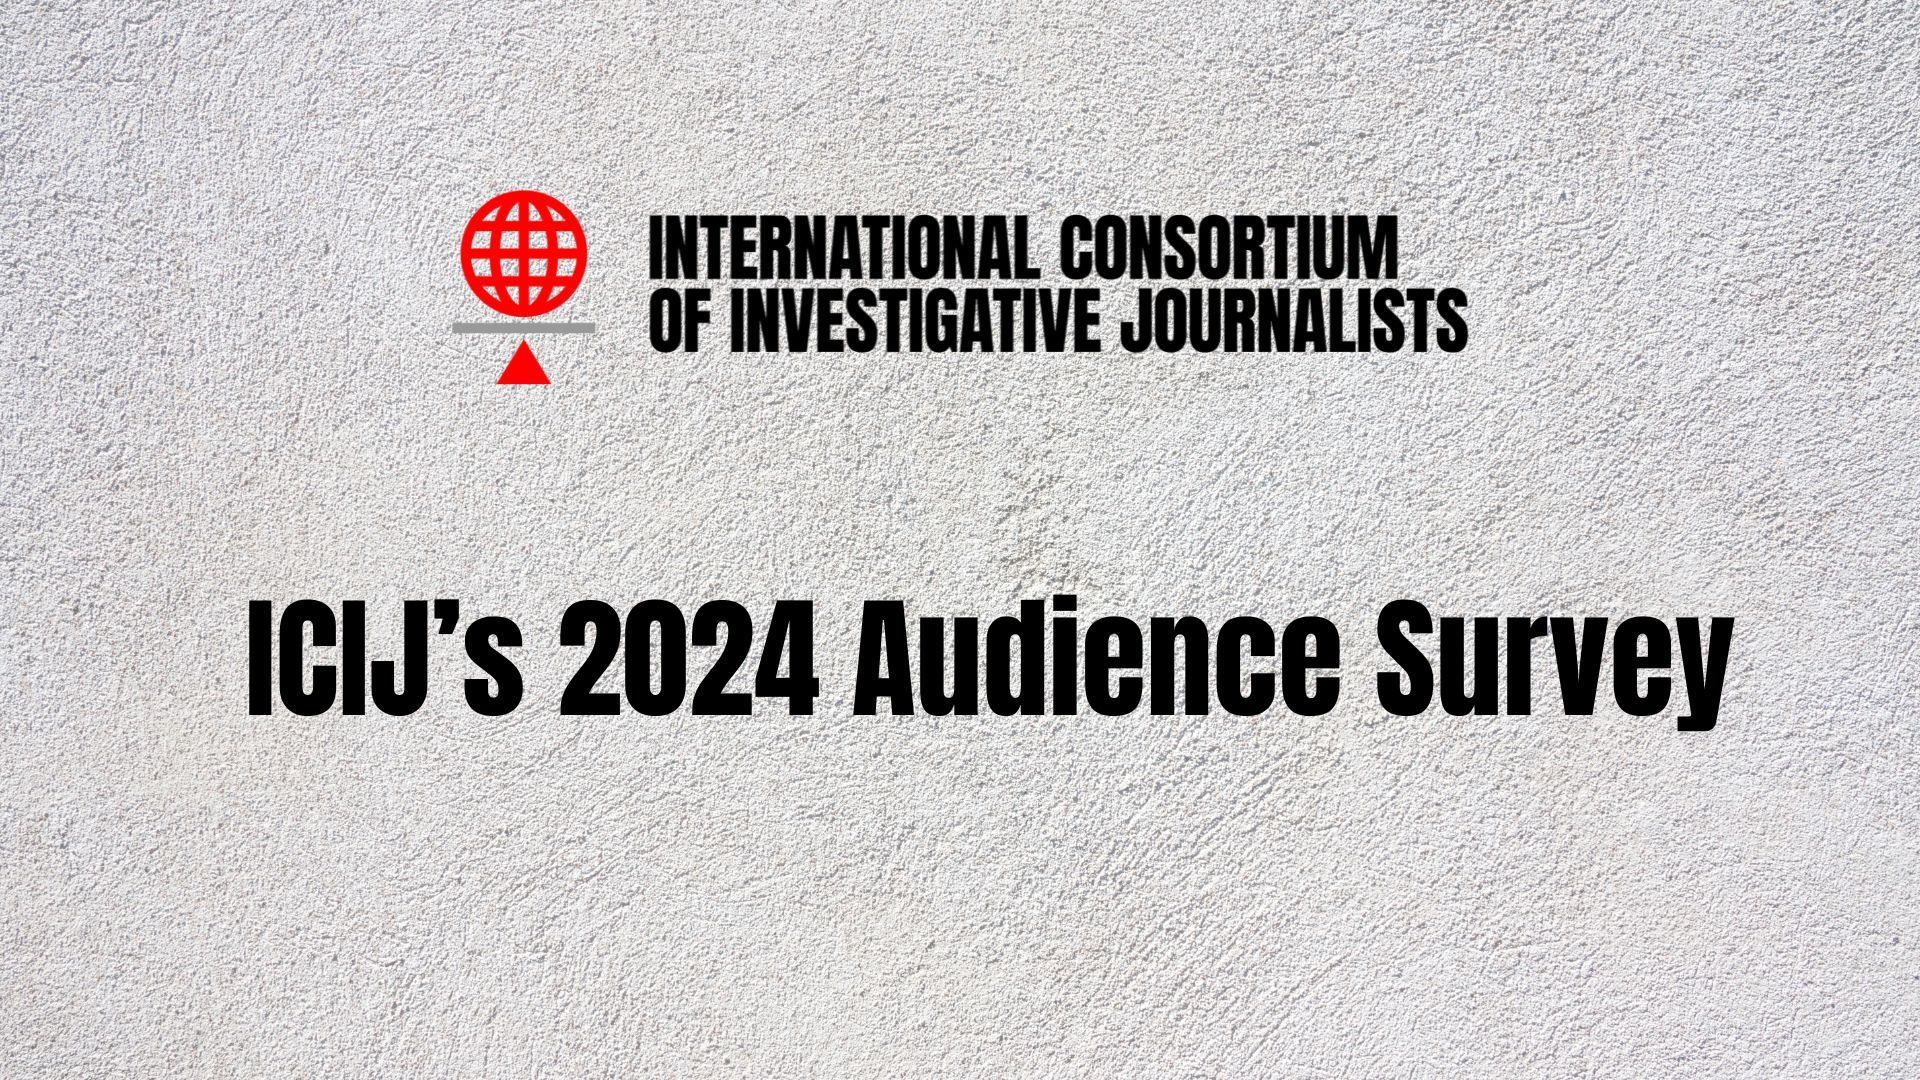 ICIJ's 2024 audience survey